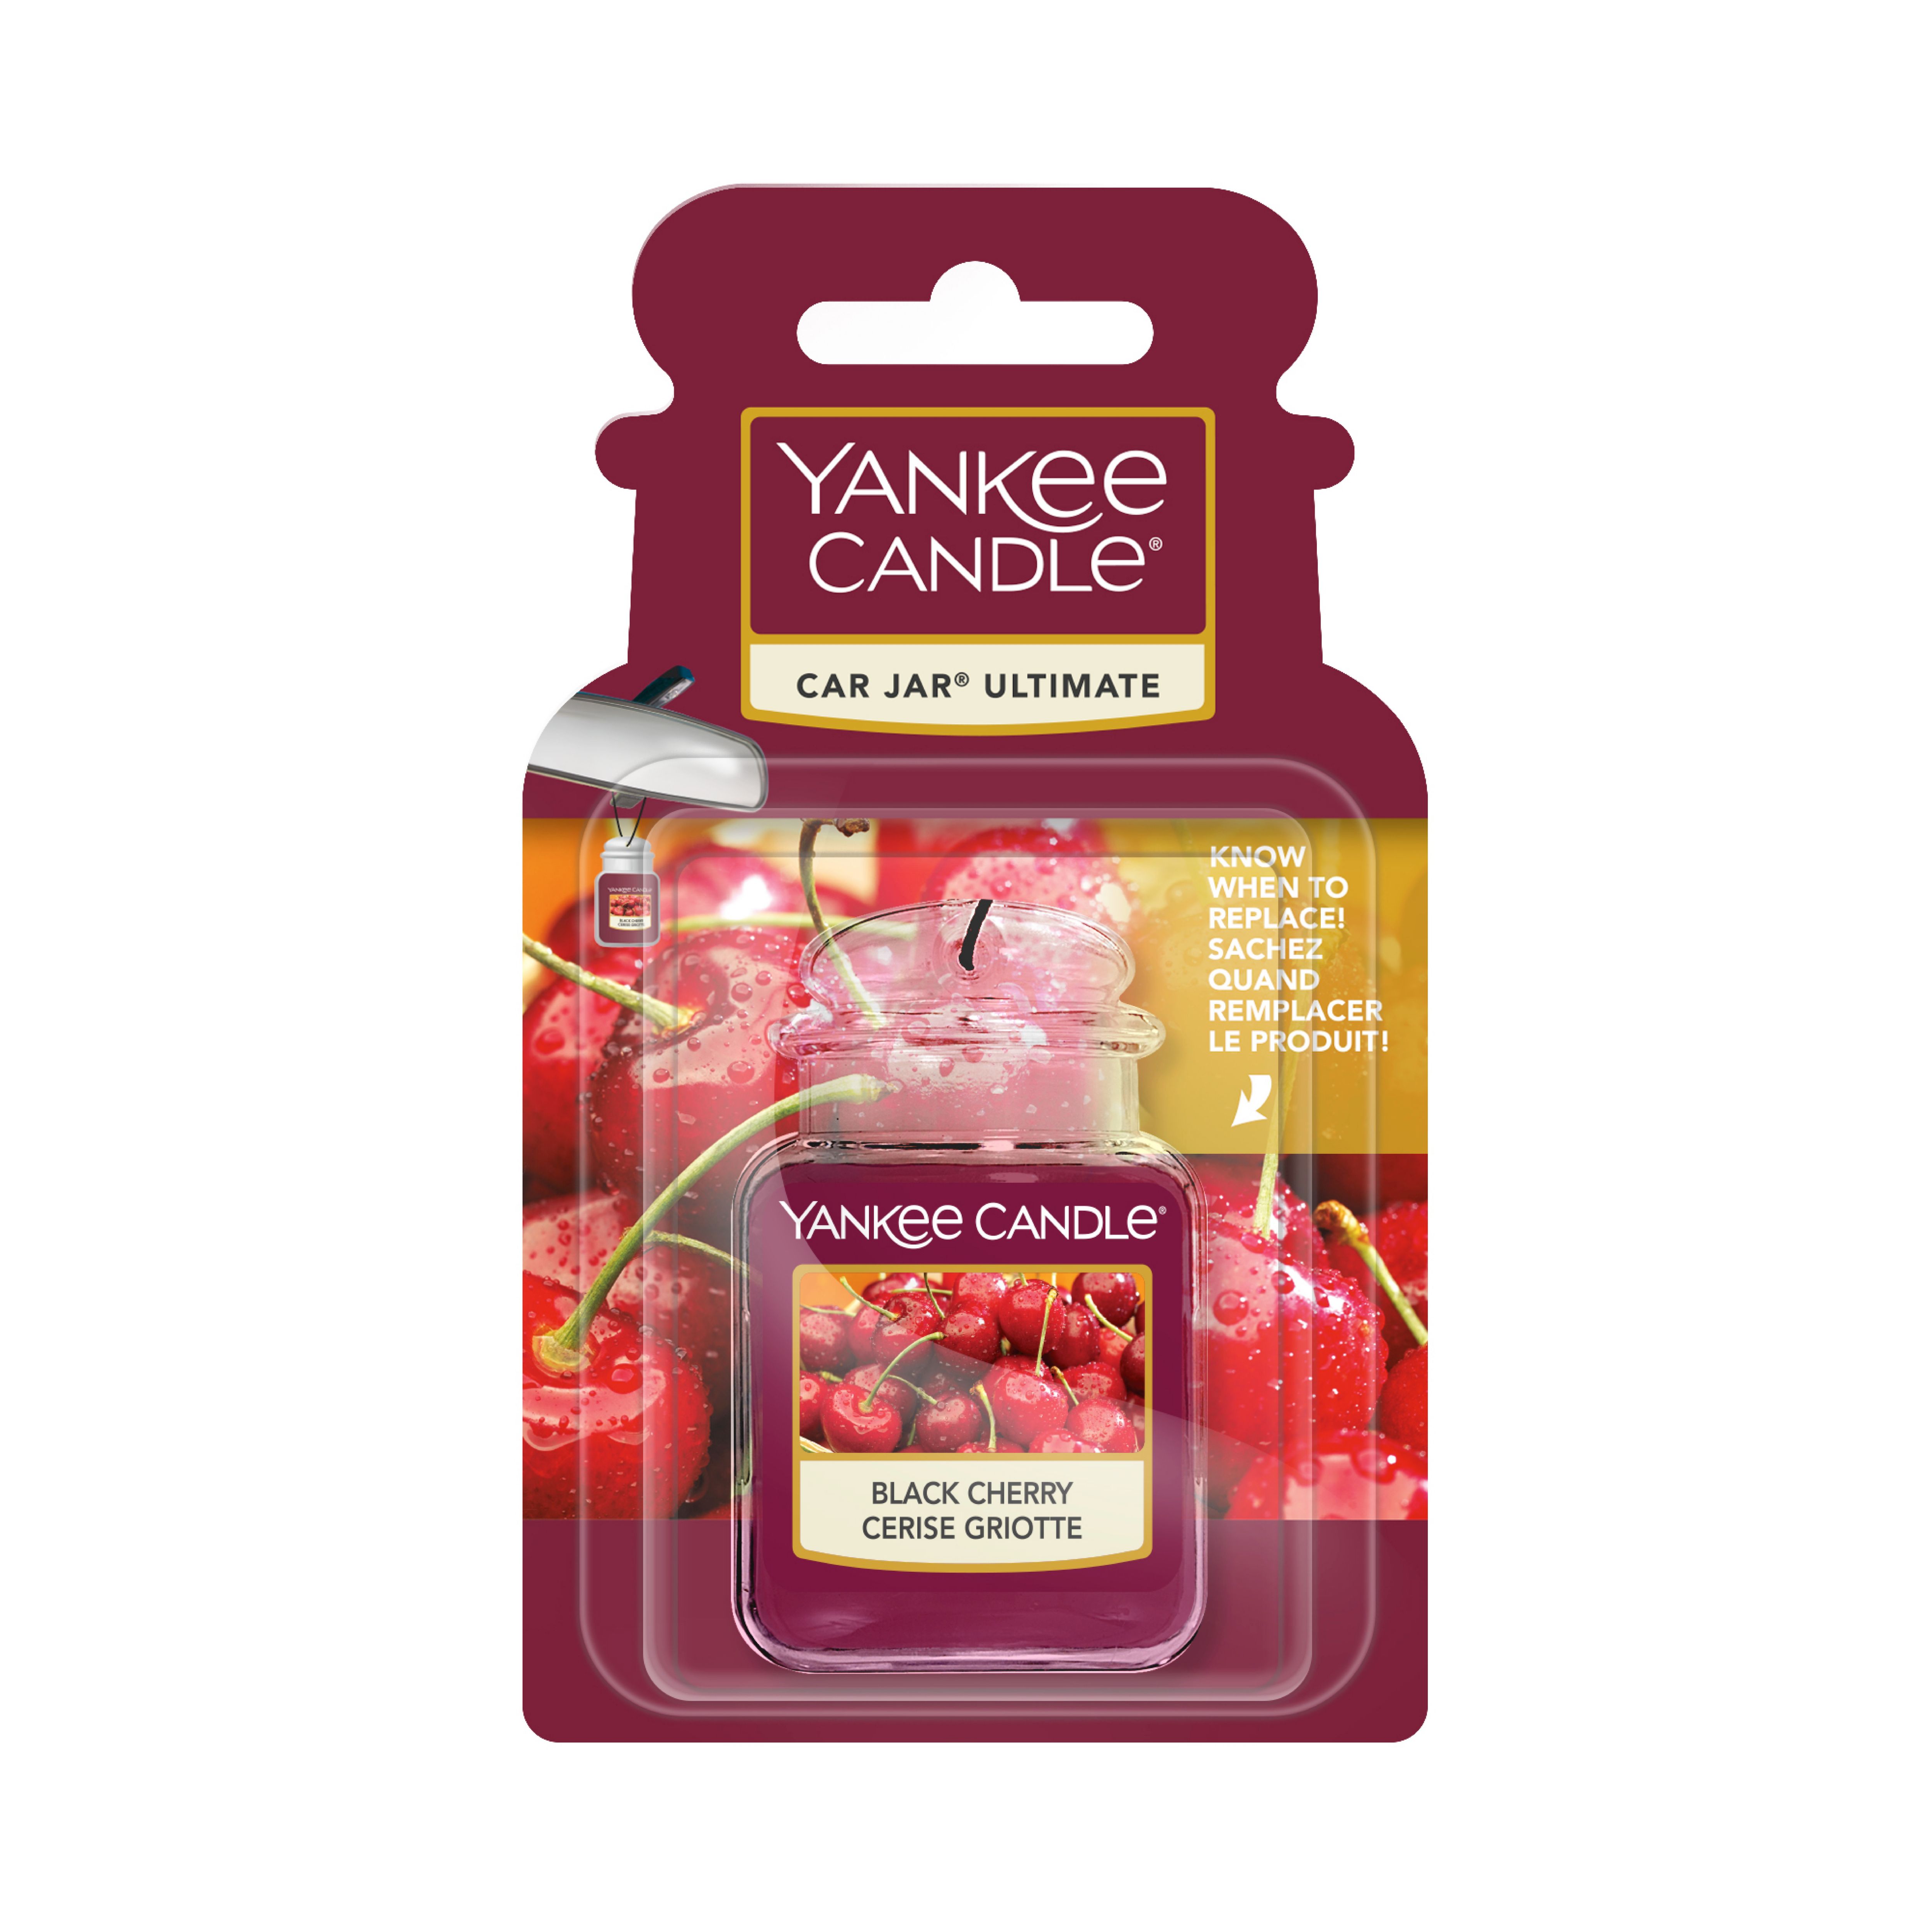 Yankee Candle Car Jar Ultimate Black Cherry Air freshener